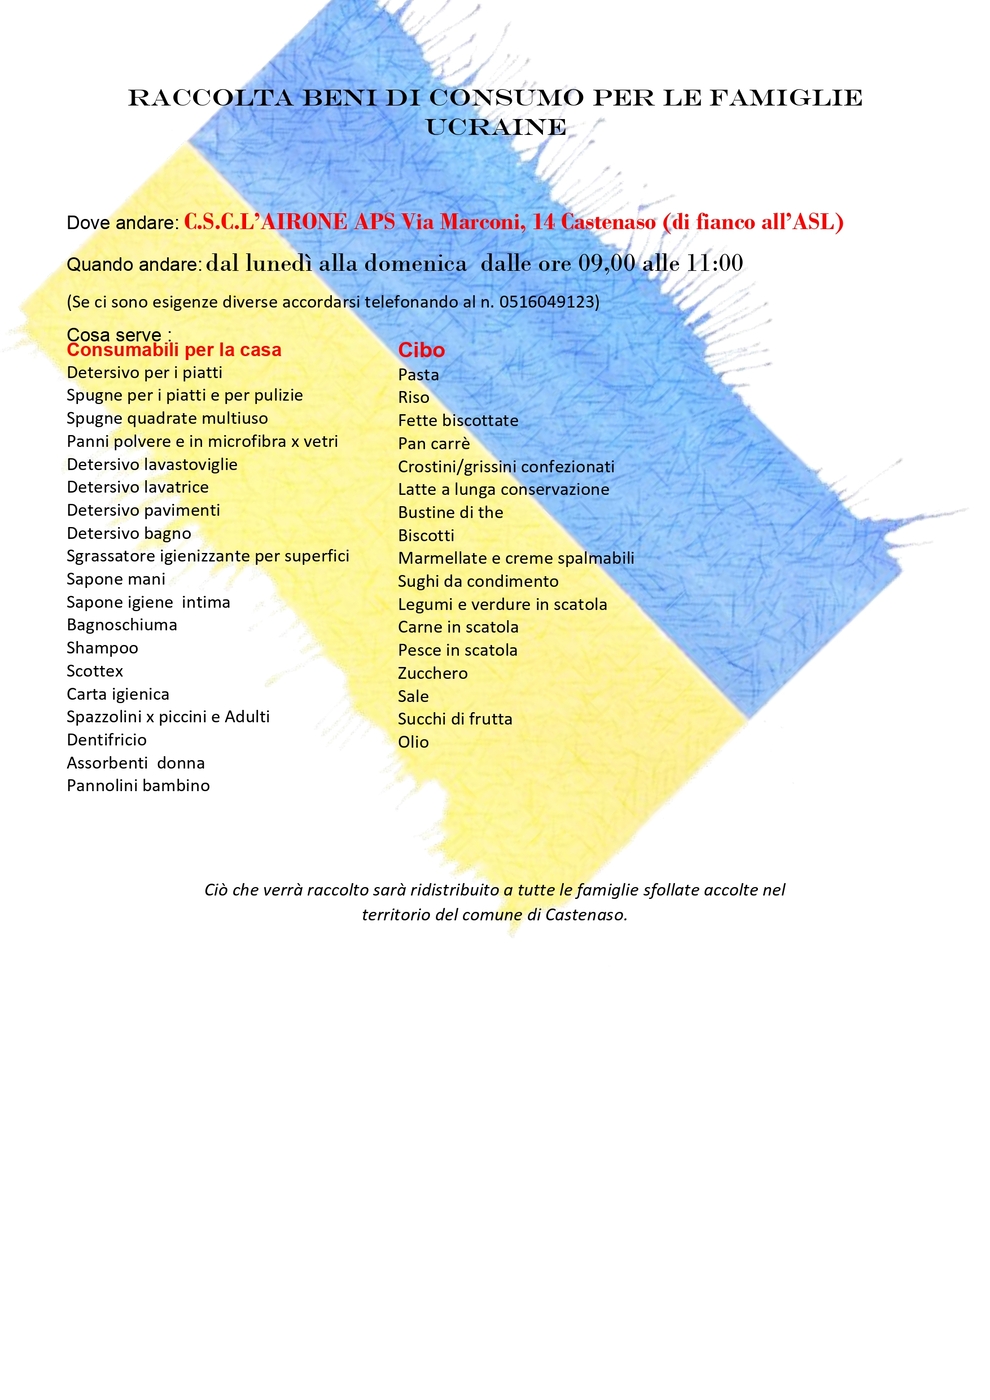 Volantino raccolta beni ucraini 14 3 2021 page 0001 1